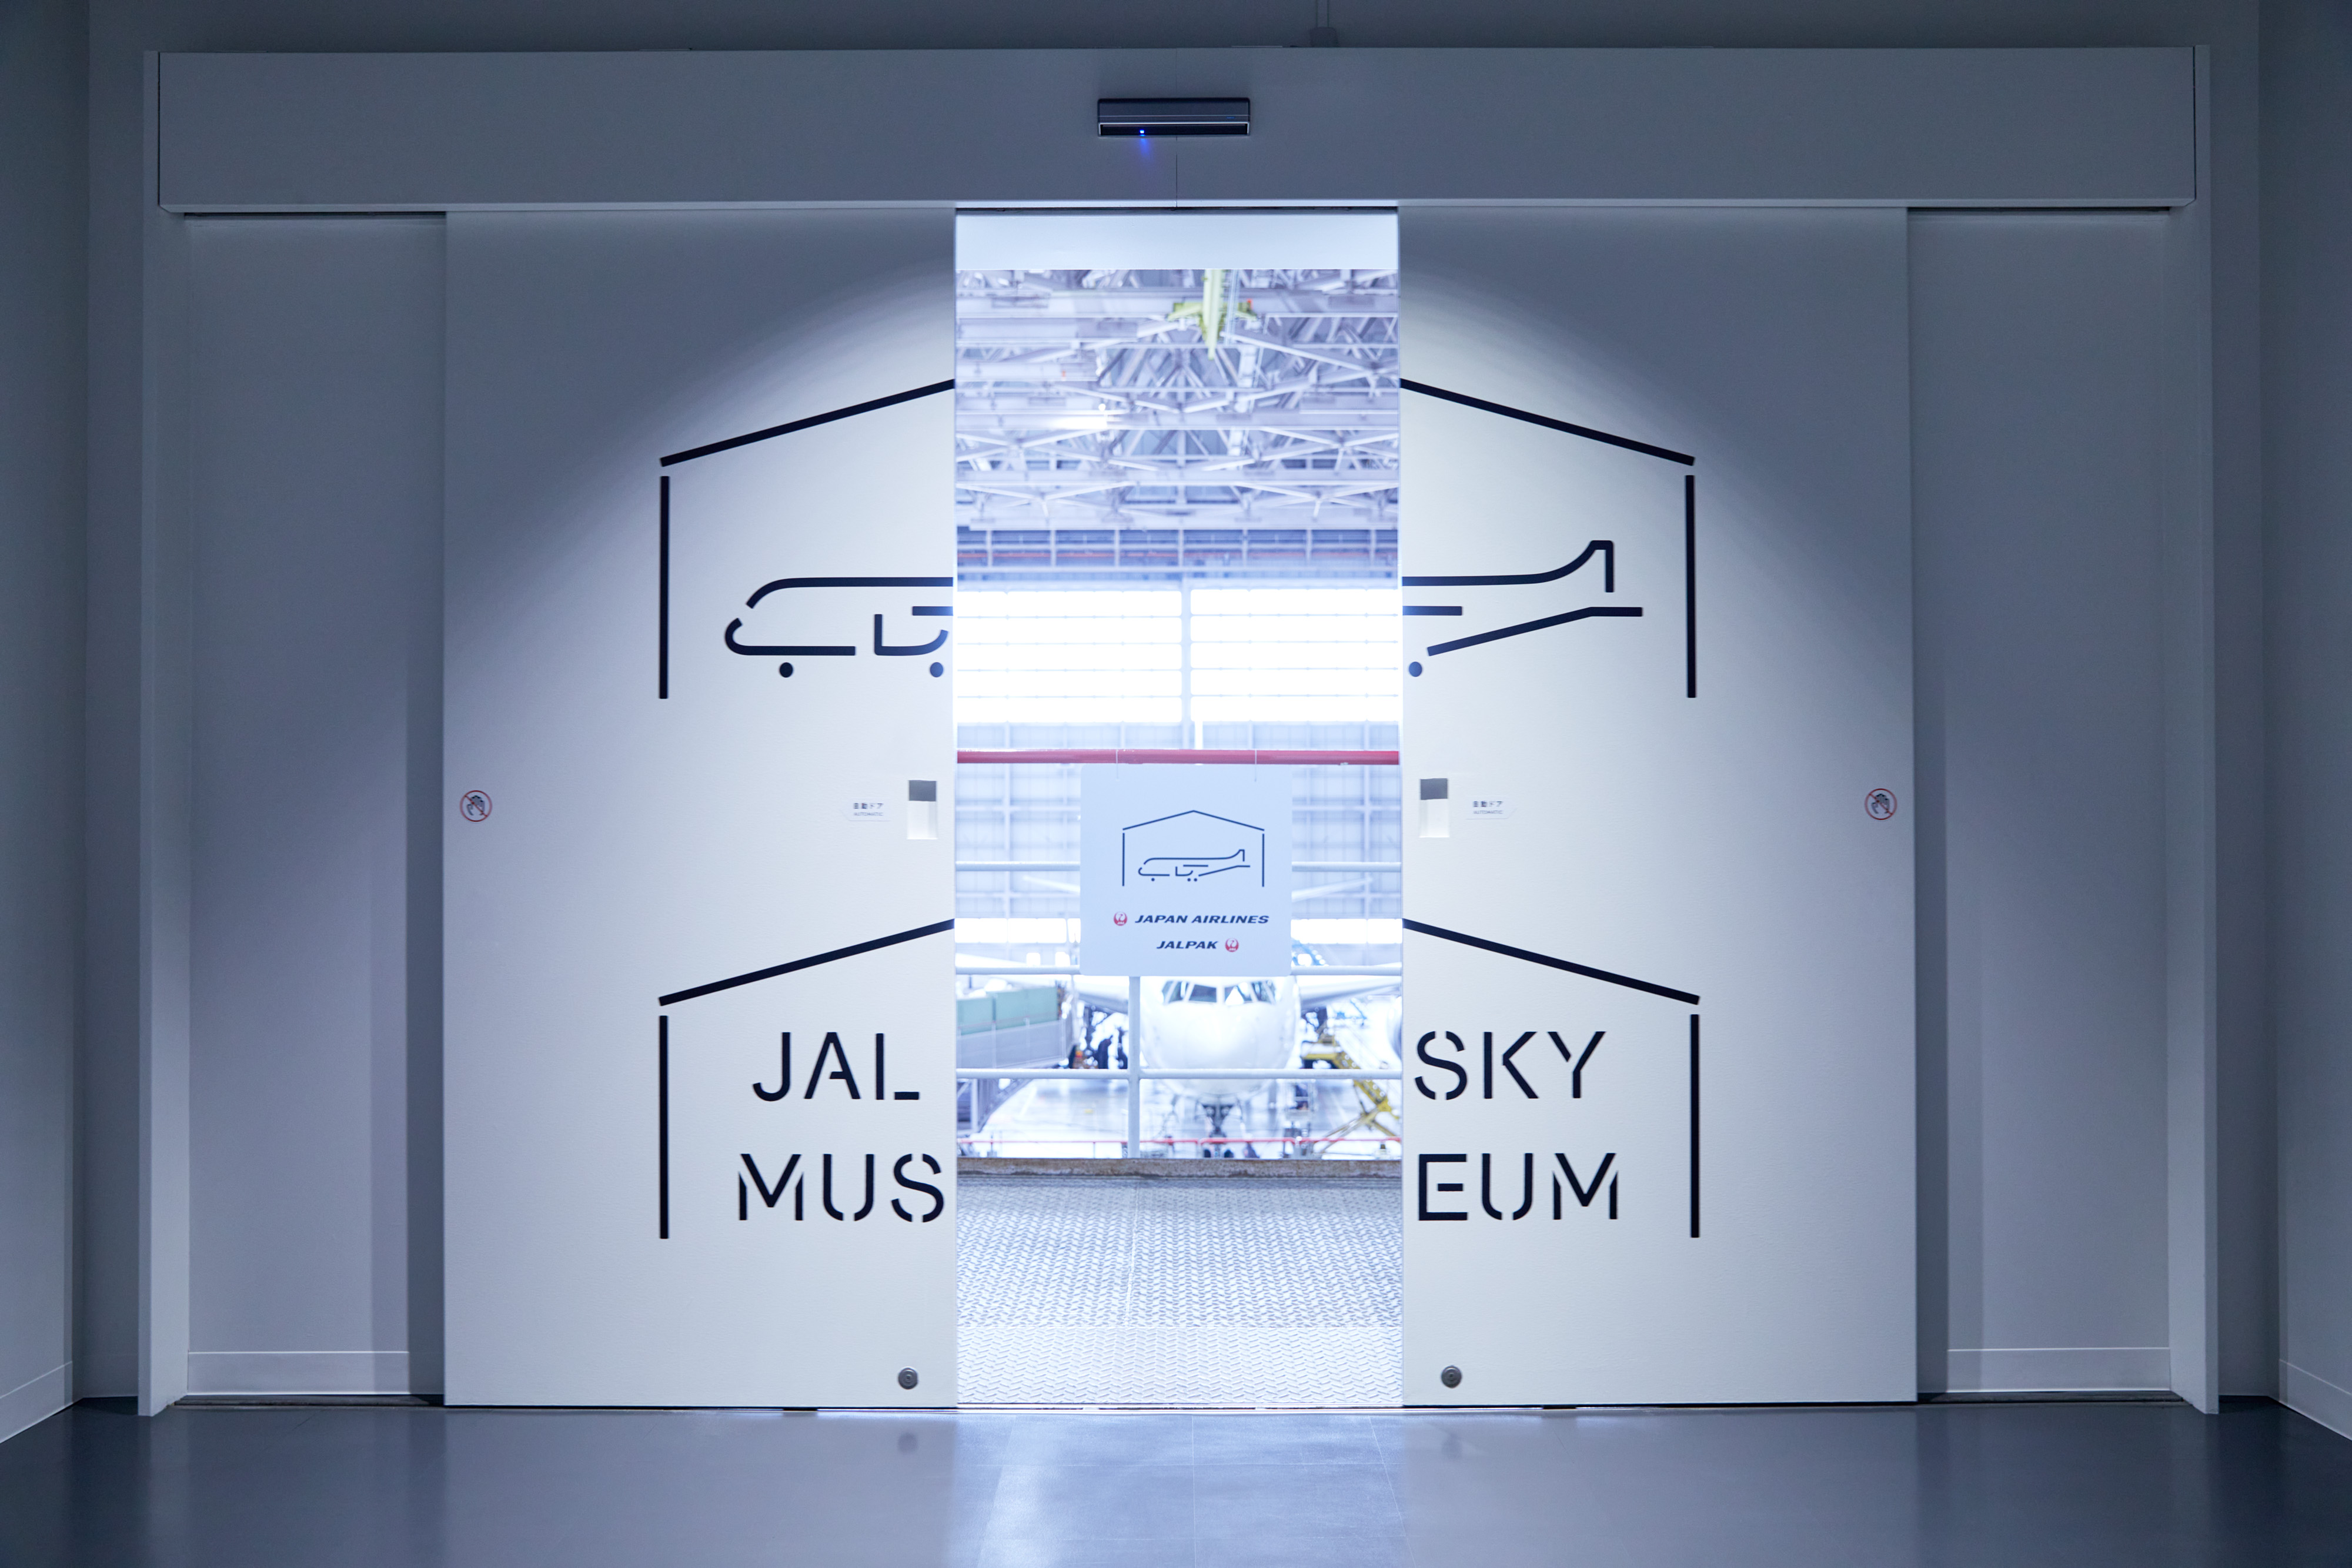 JAL SKY MUSEUM